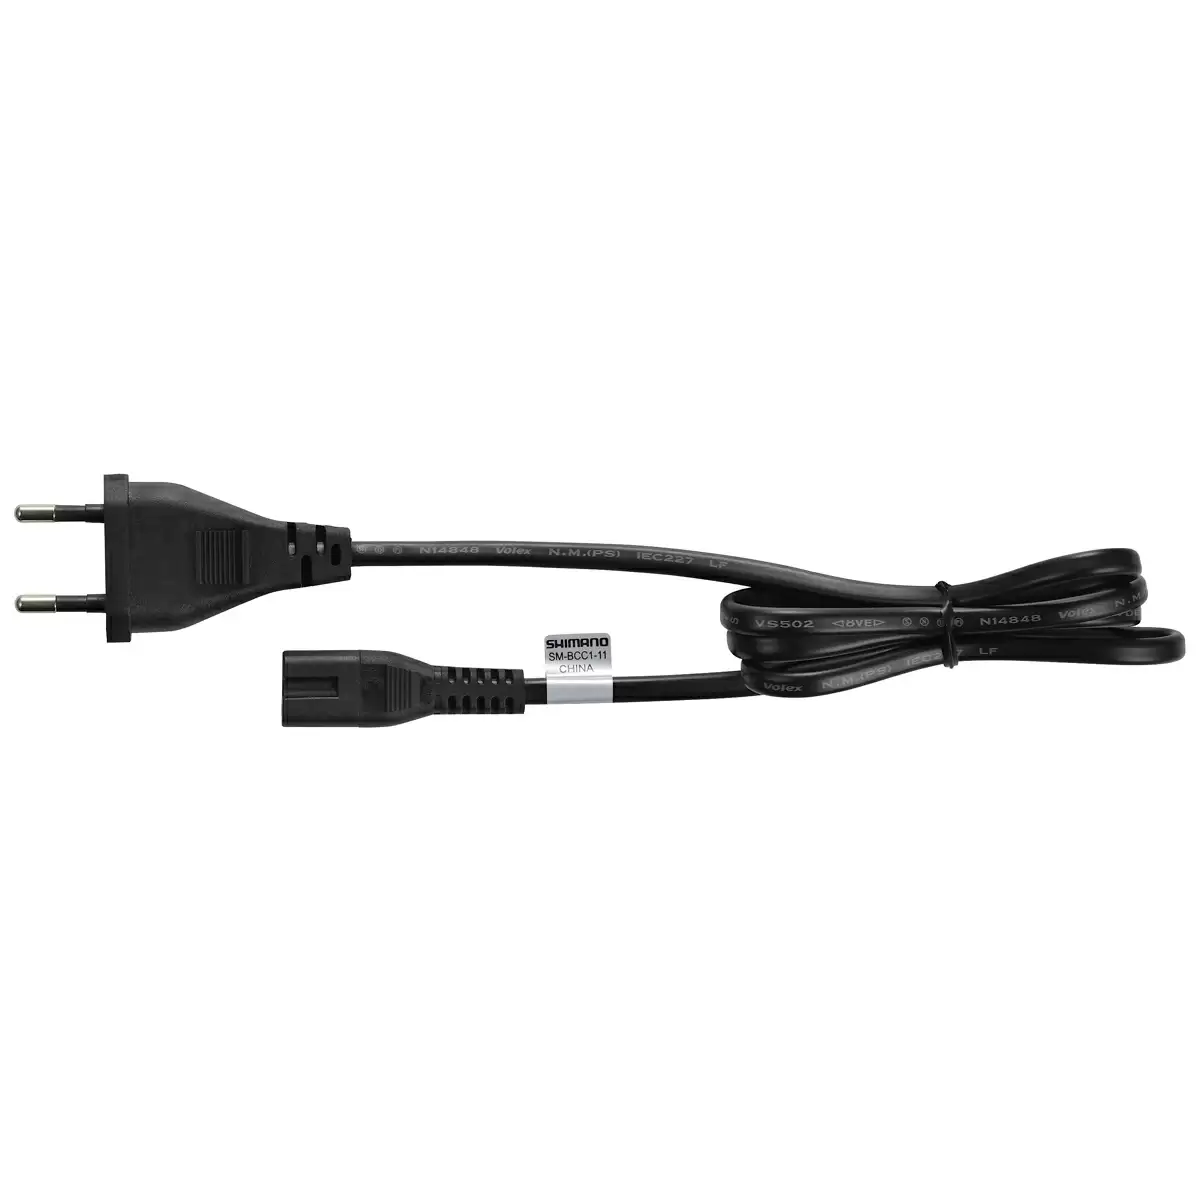 Cable de alimentación SM-BCC11 para cargador de batería - image